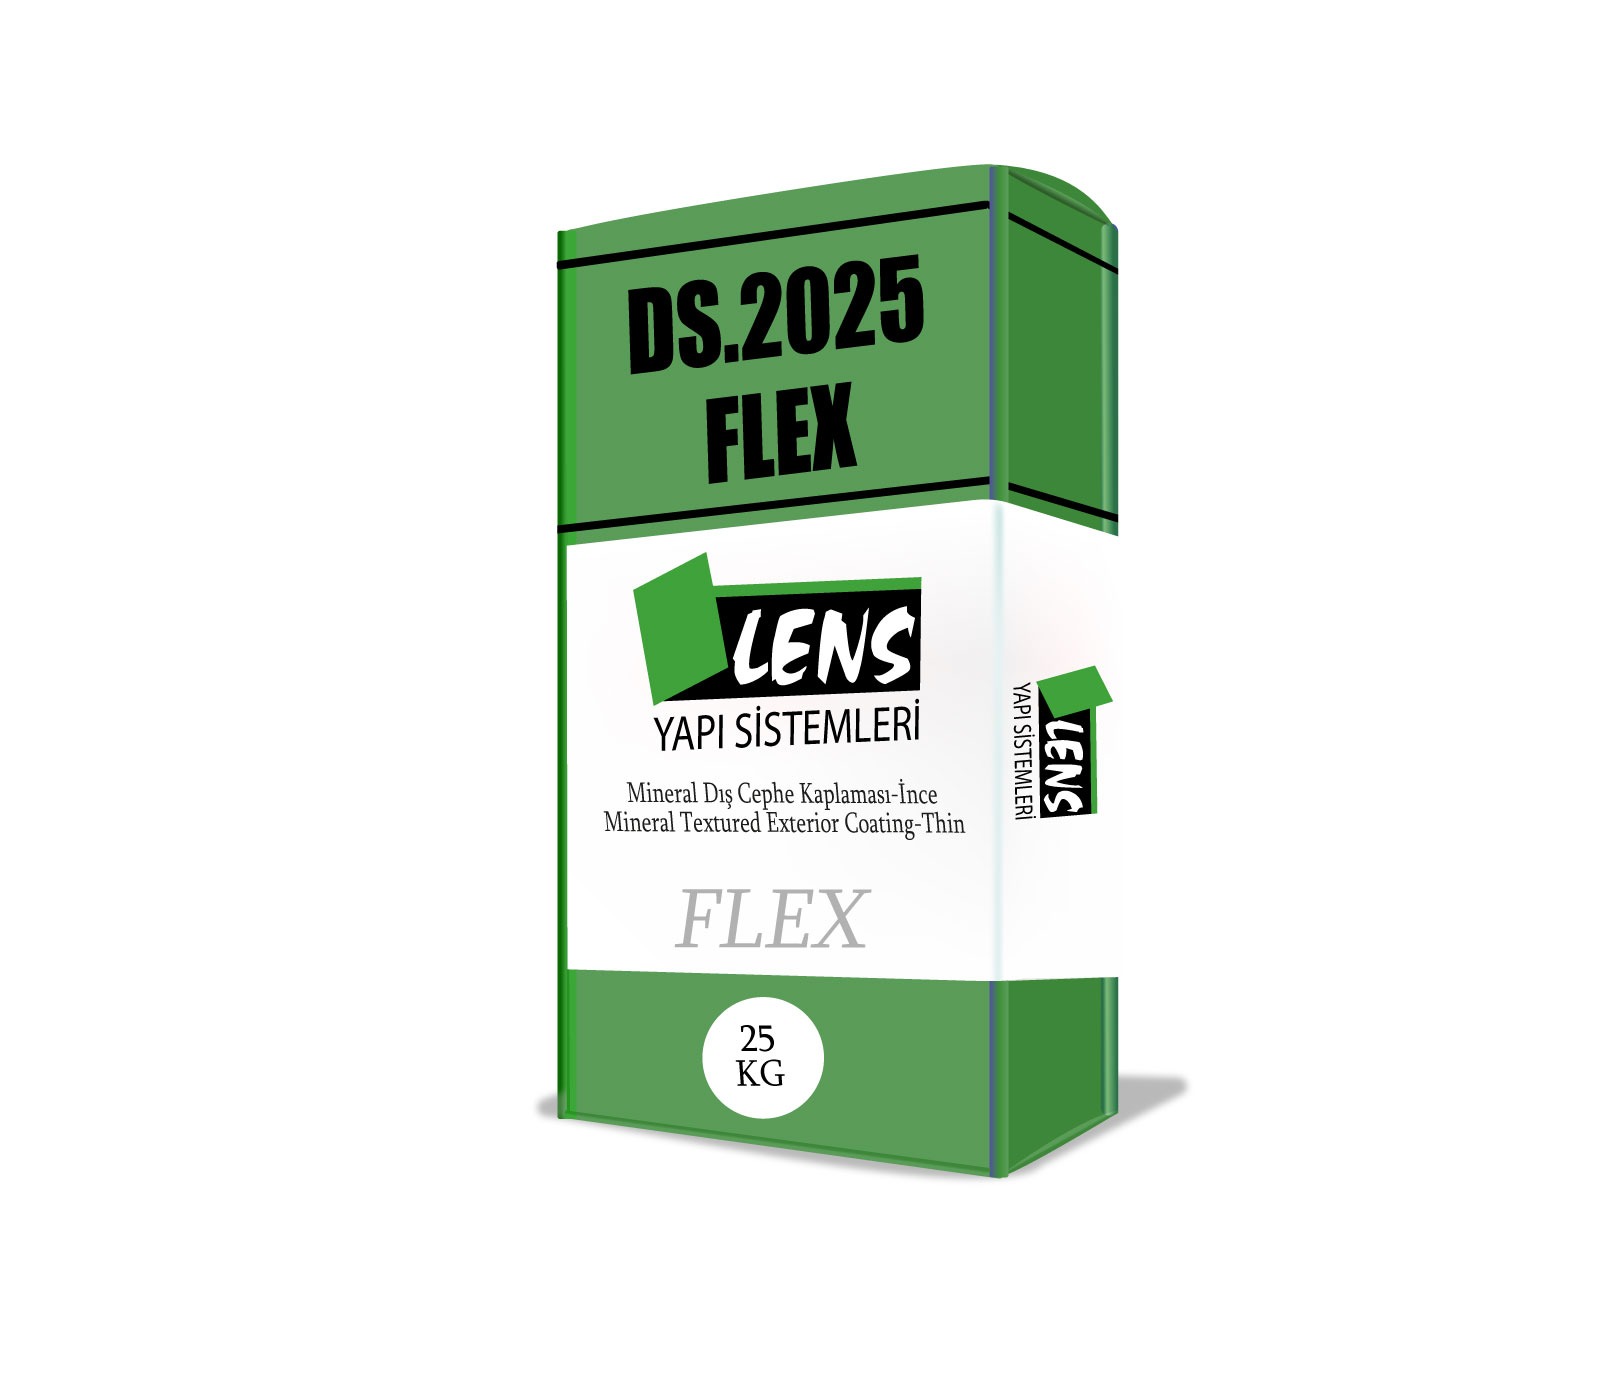 DS.2025 Flex İnce Mineral Sıva